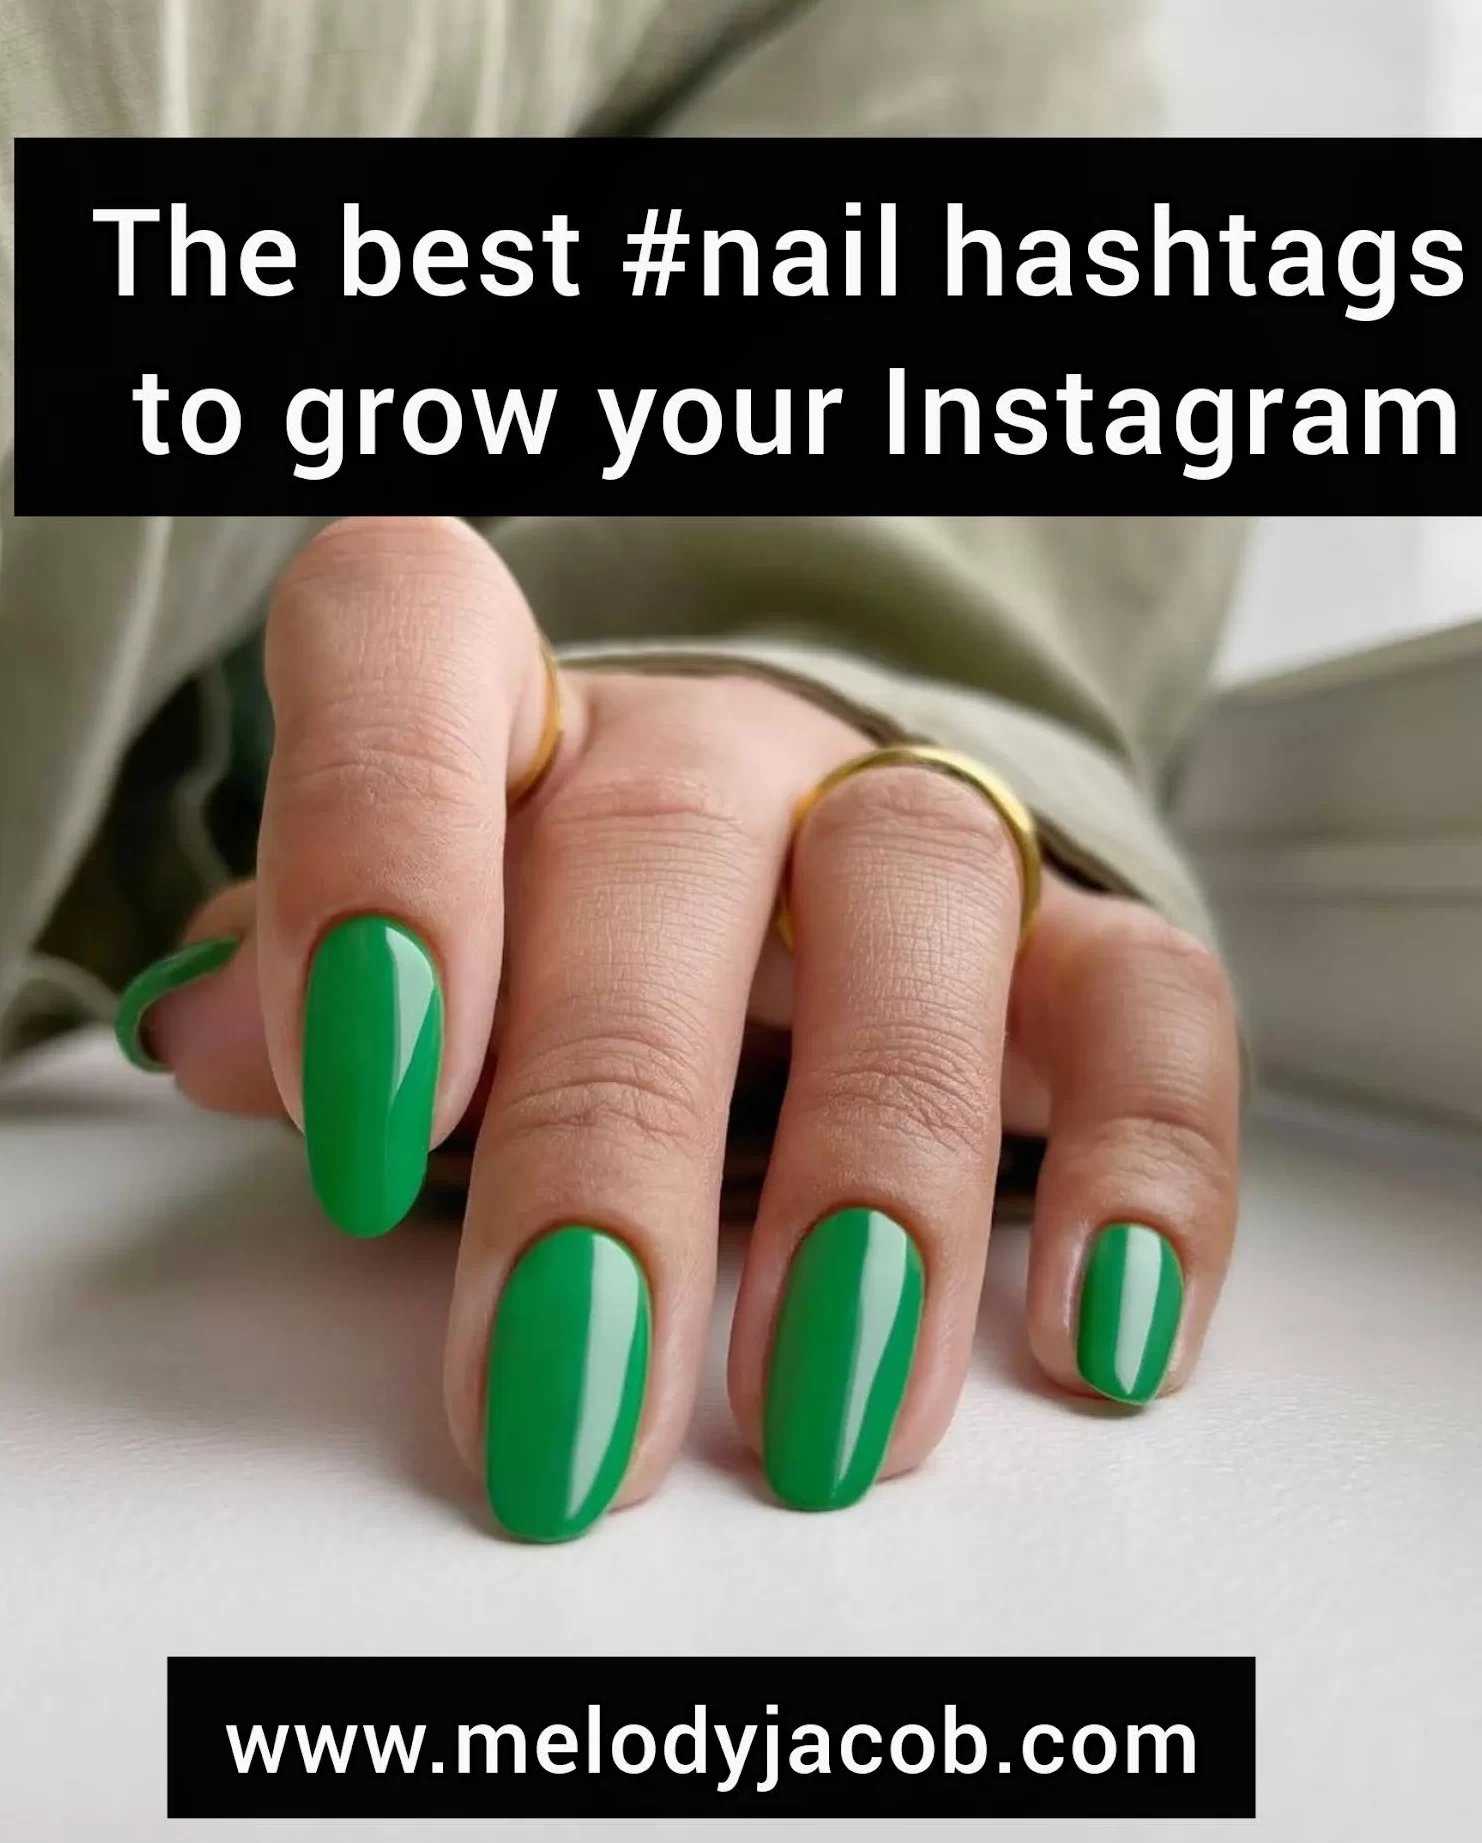 Los mejores hashtags #nailartist para Instagram, TikTok |